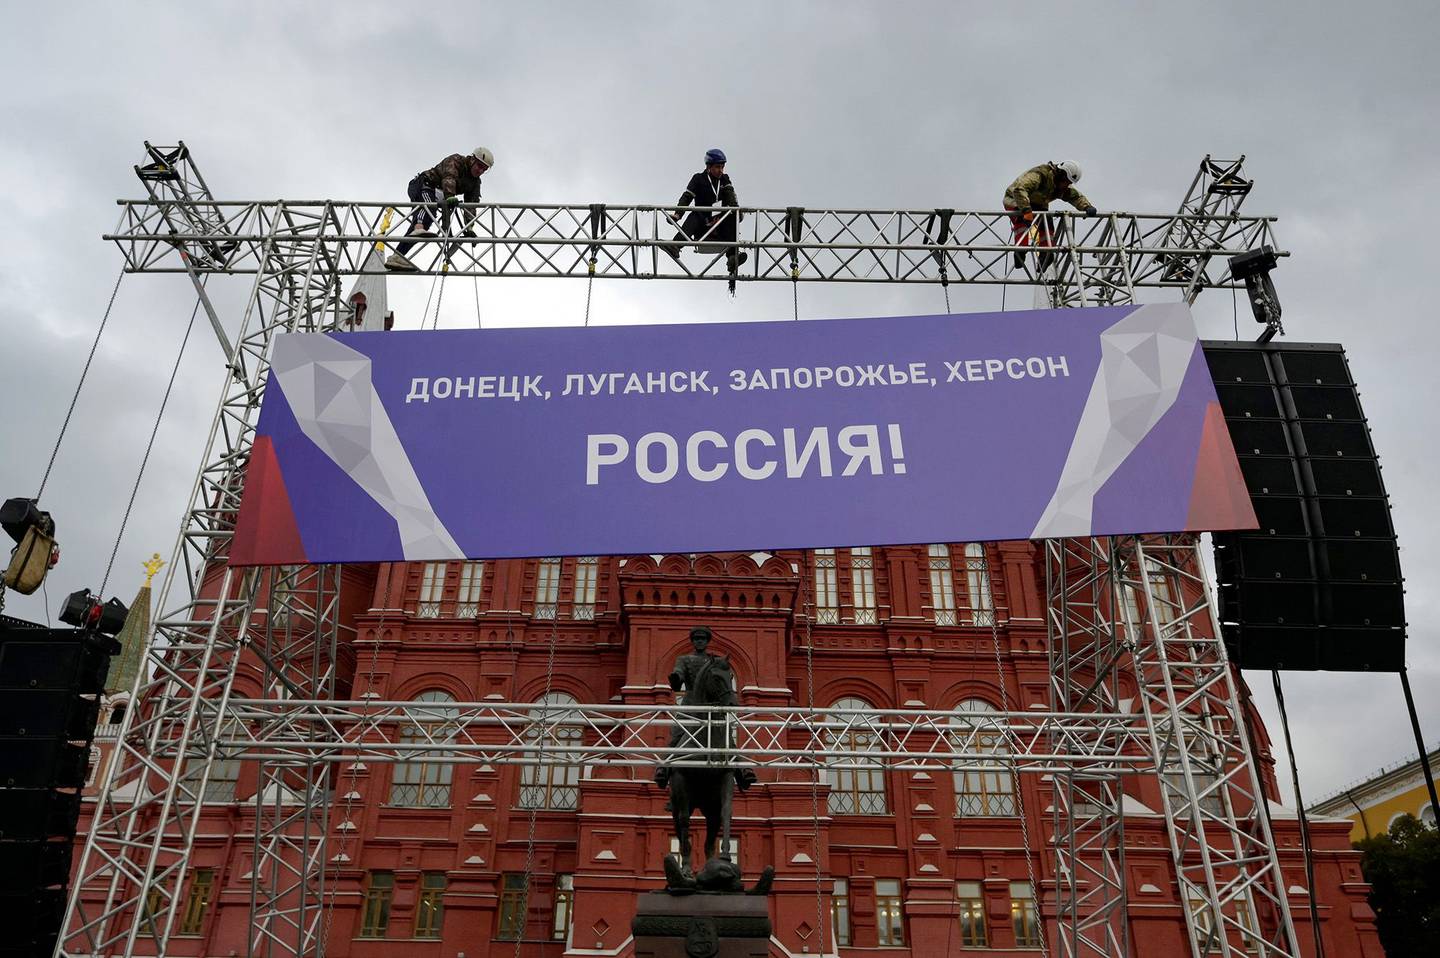 "!Donetsk, Lugansk, Zaporizhzhia, Kherson - Rusia!" se lee en un cartel en Moscú